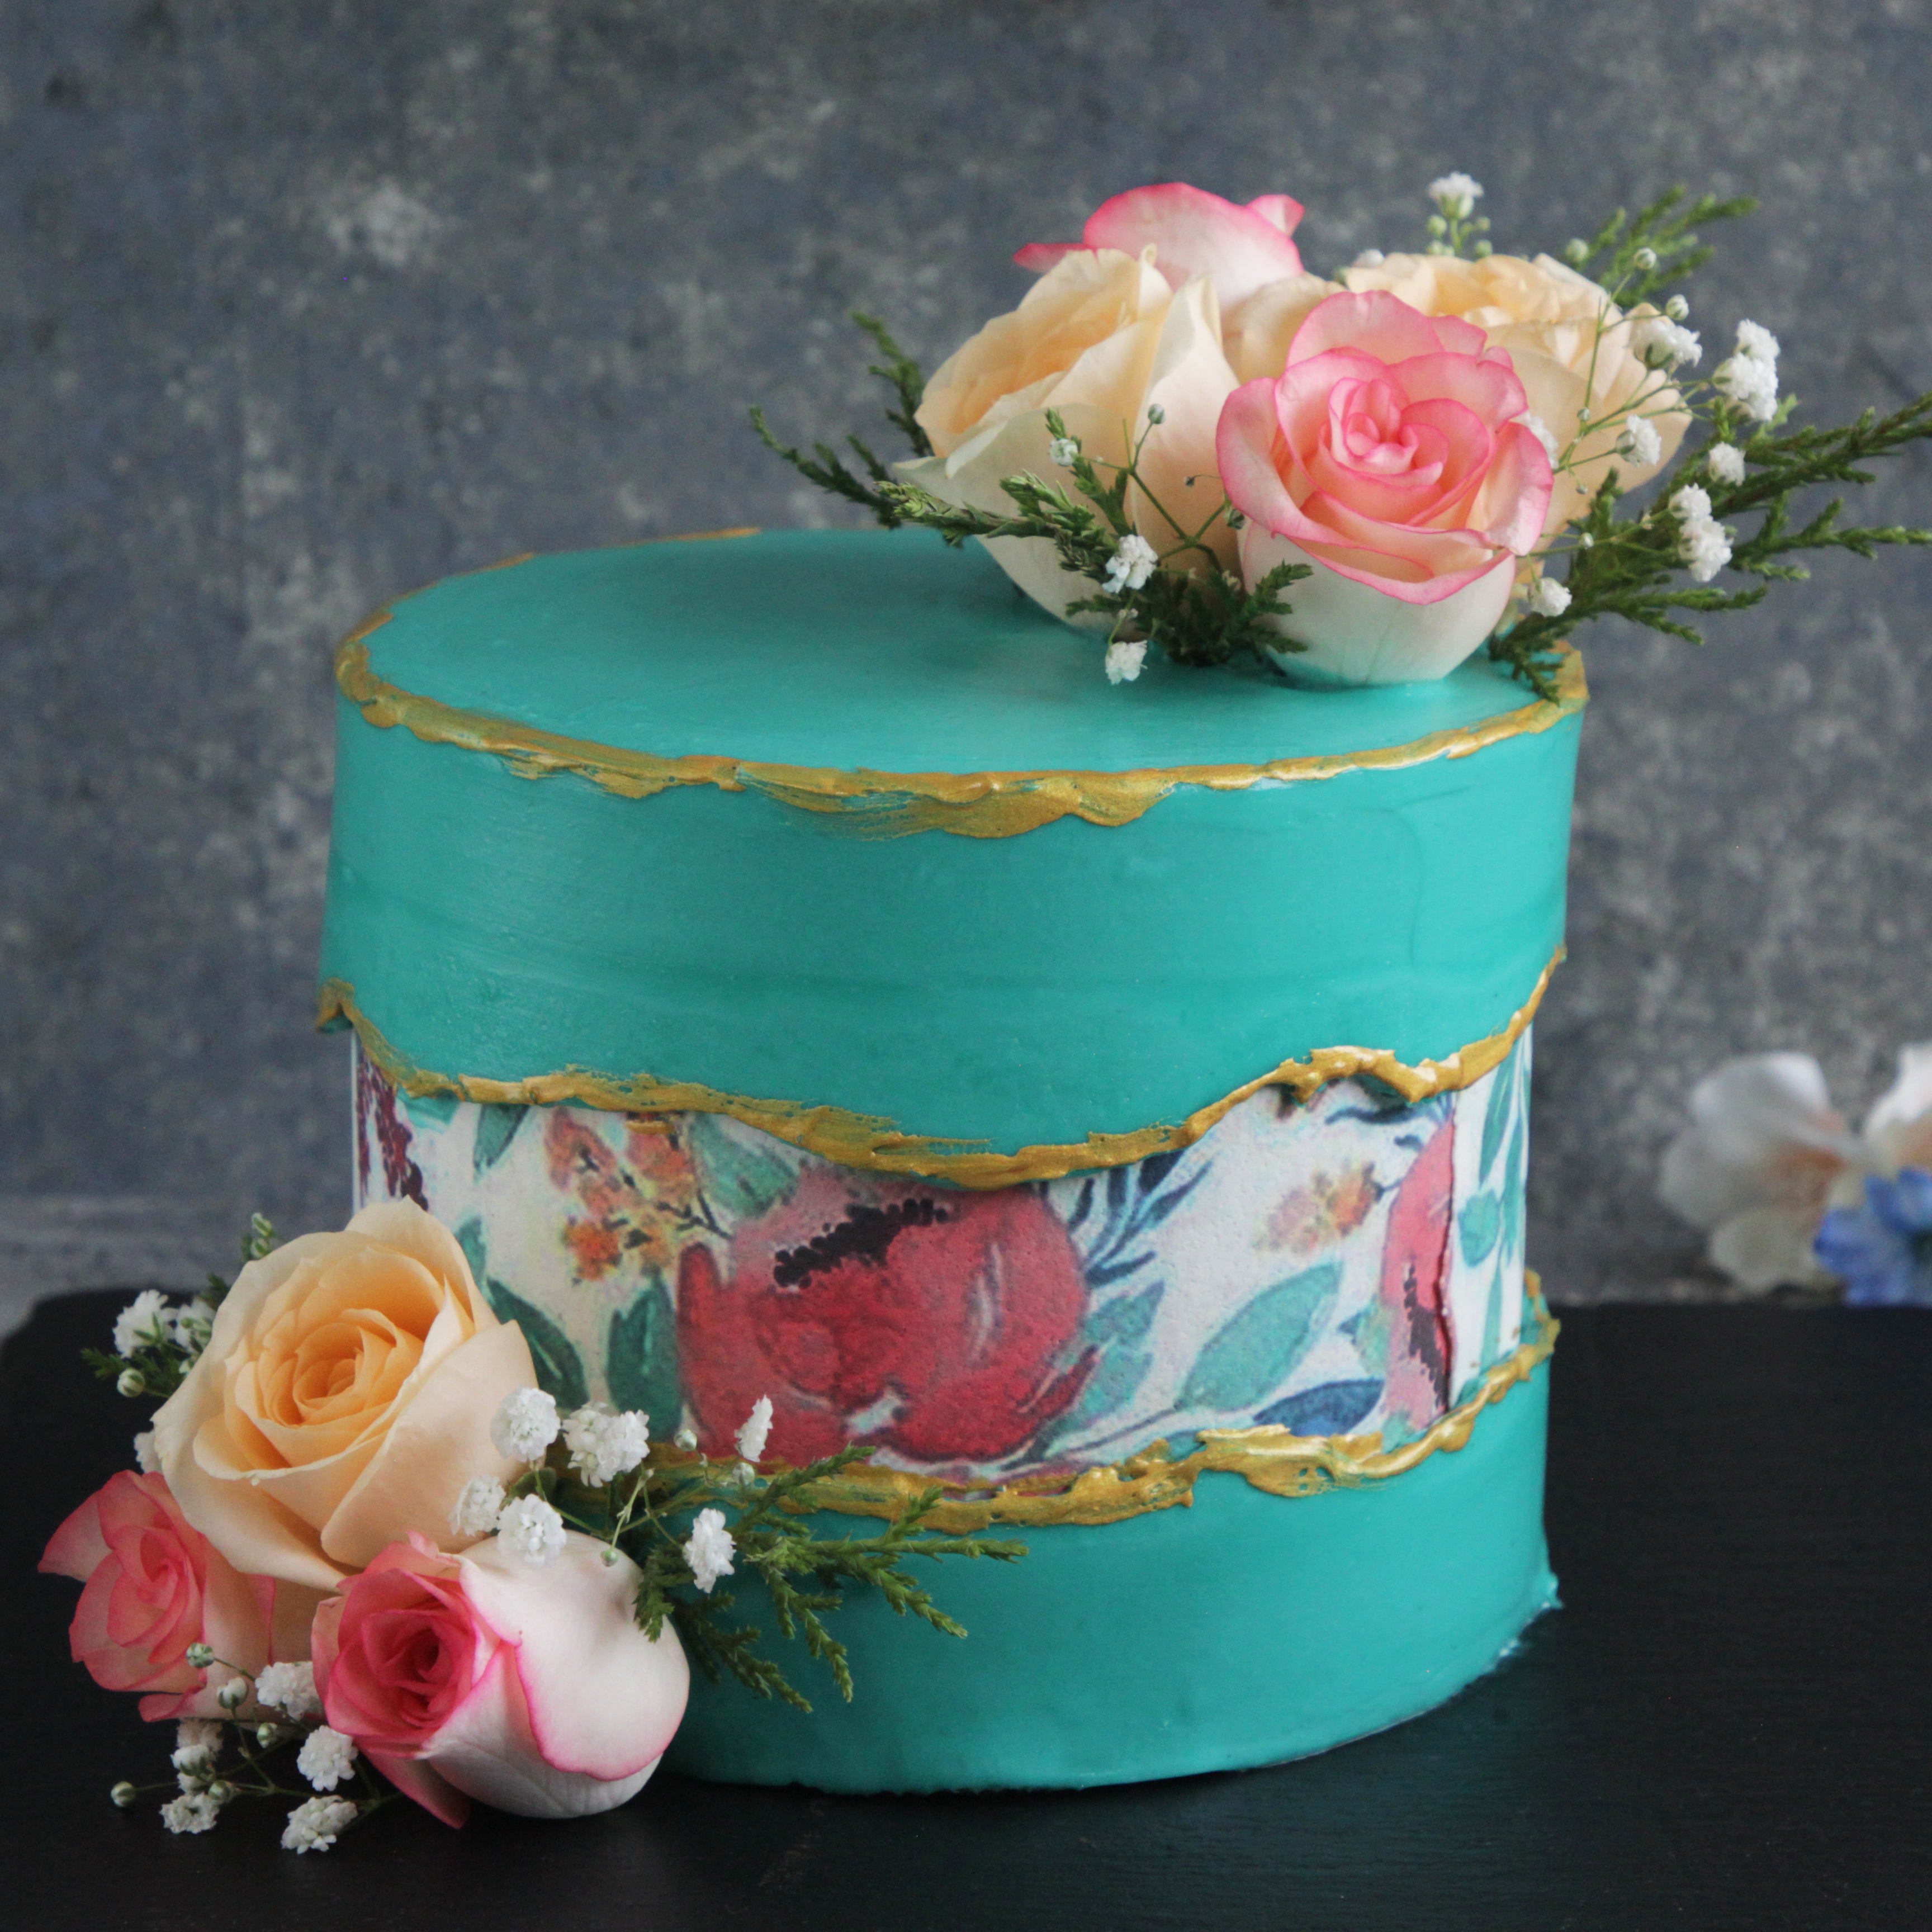 Cake decorating tutorials | FAULT LINE CAKE | Sugarella Sweets - YouTube